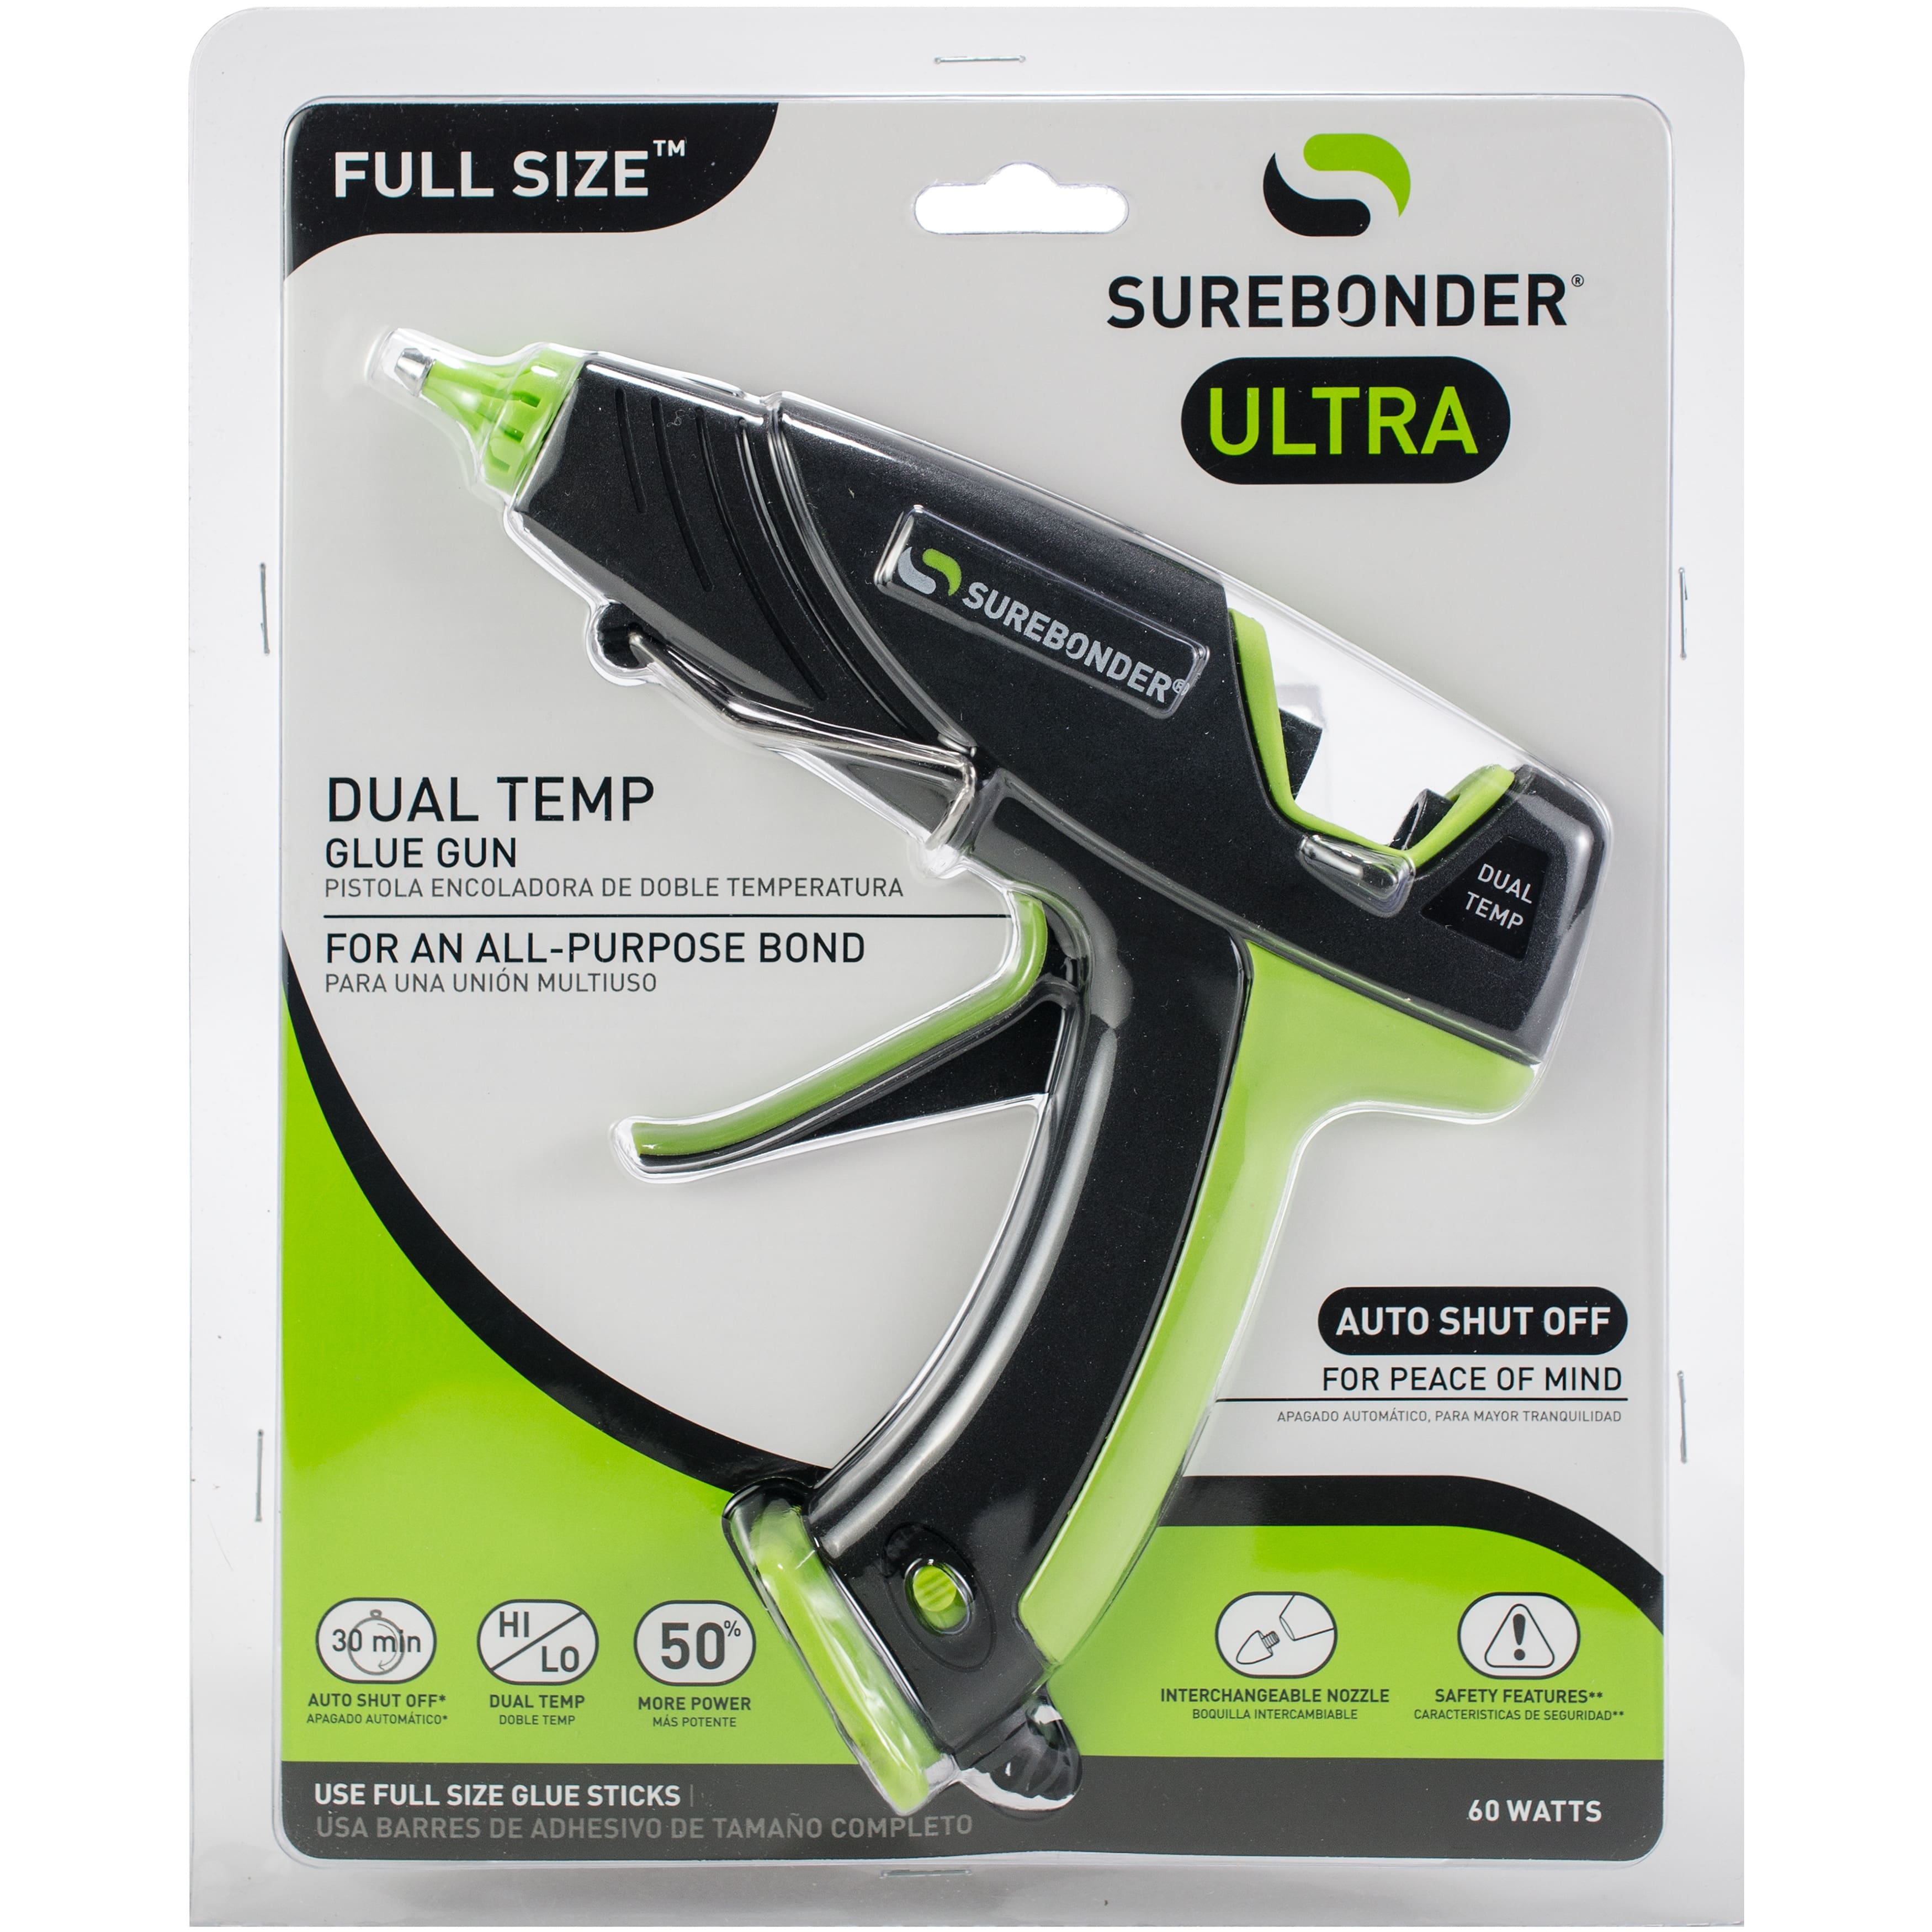 Surebonder Ultra Dual Temp Glue Gun